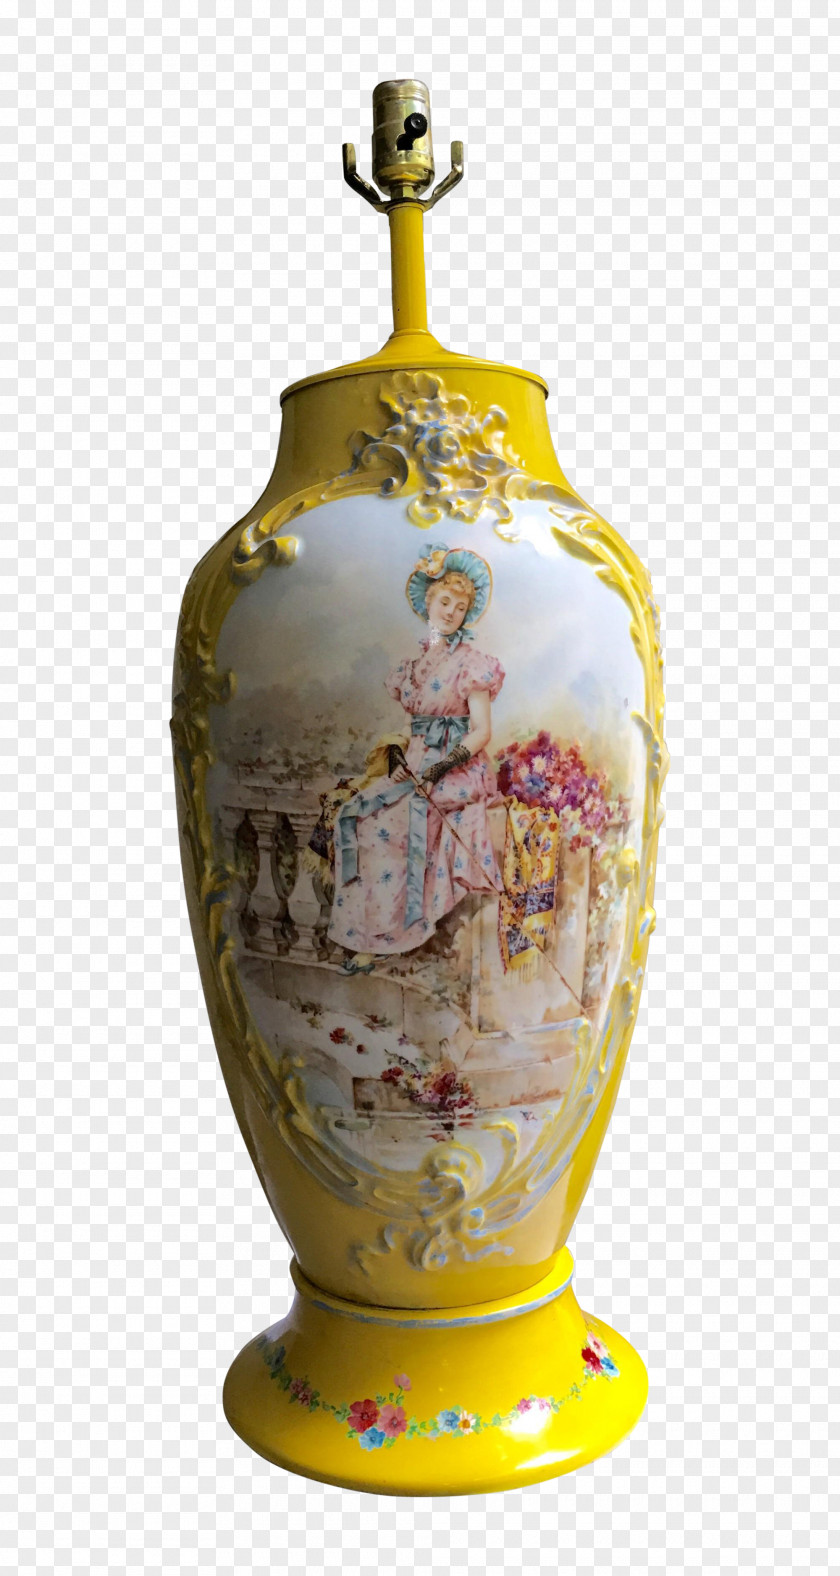 Hand-painted Lamp Ceramic Vase Urn Porcelain Artifact PNG